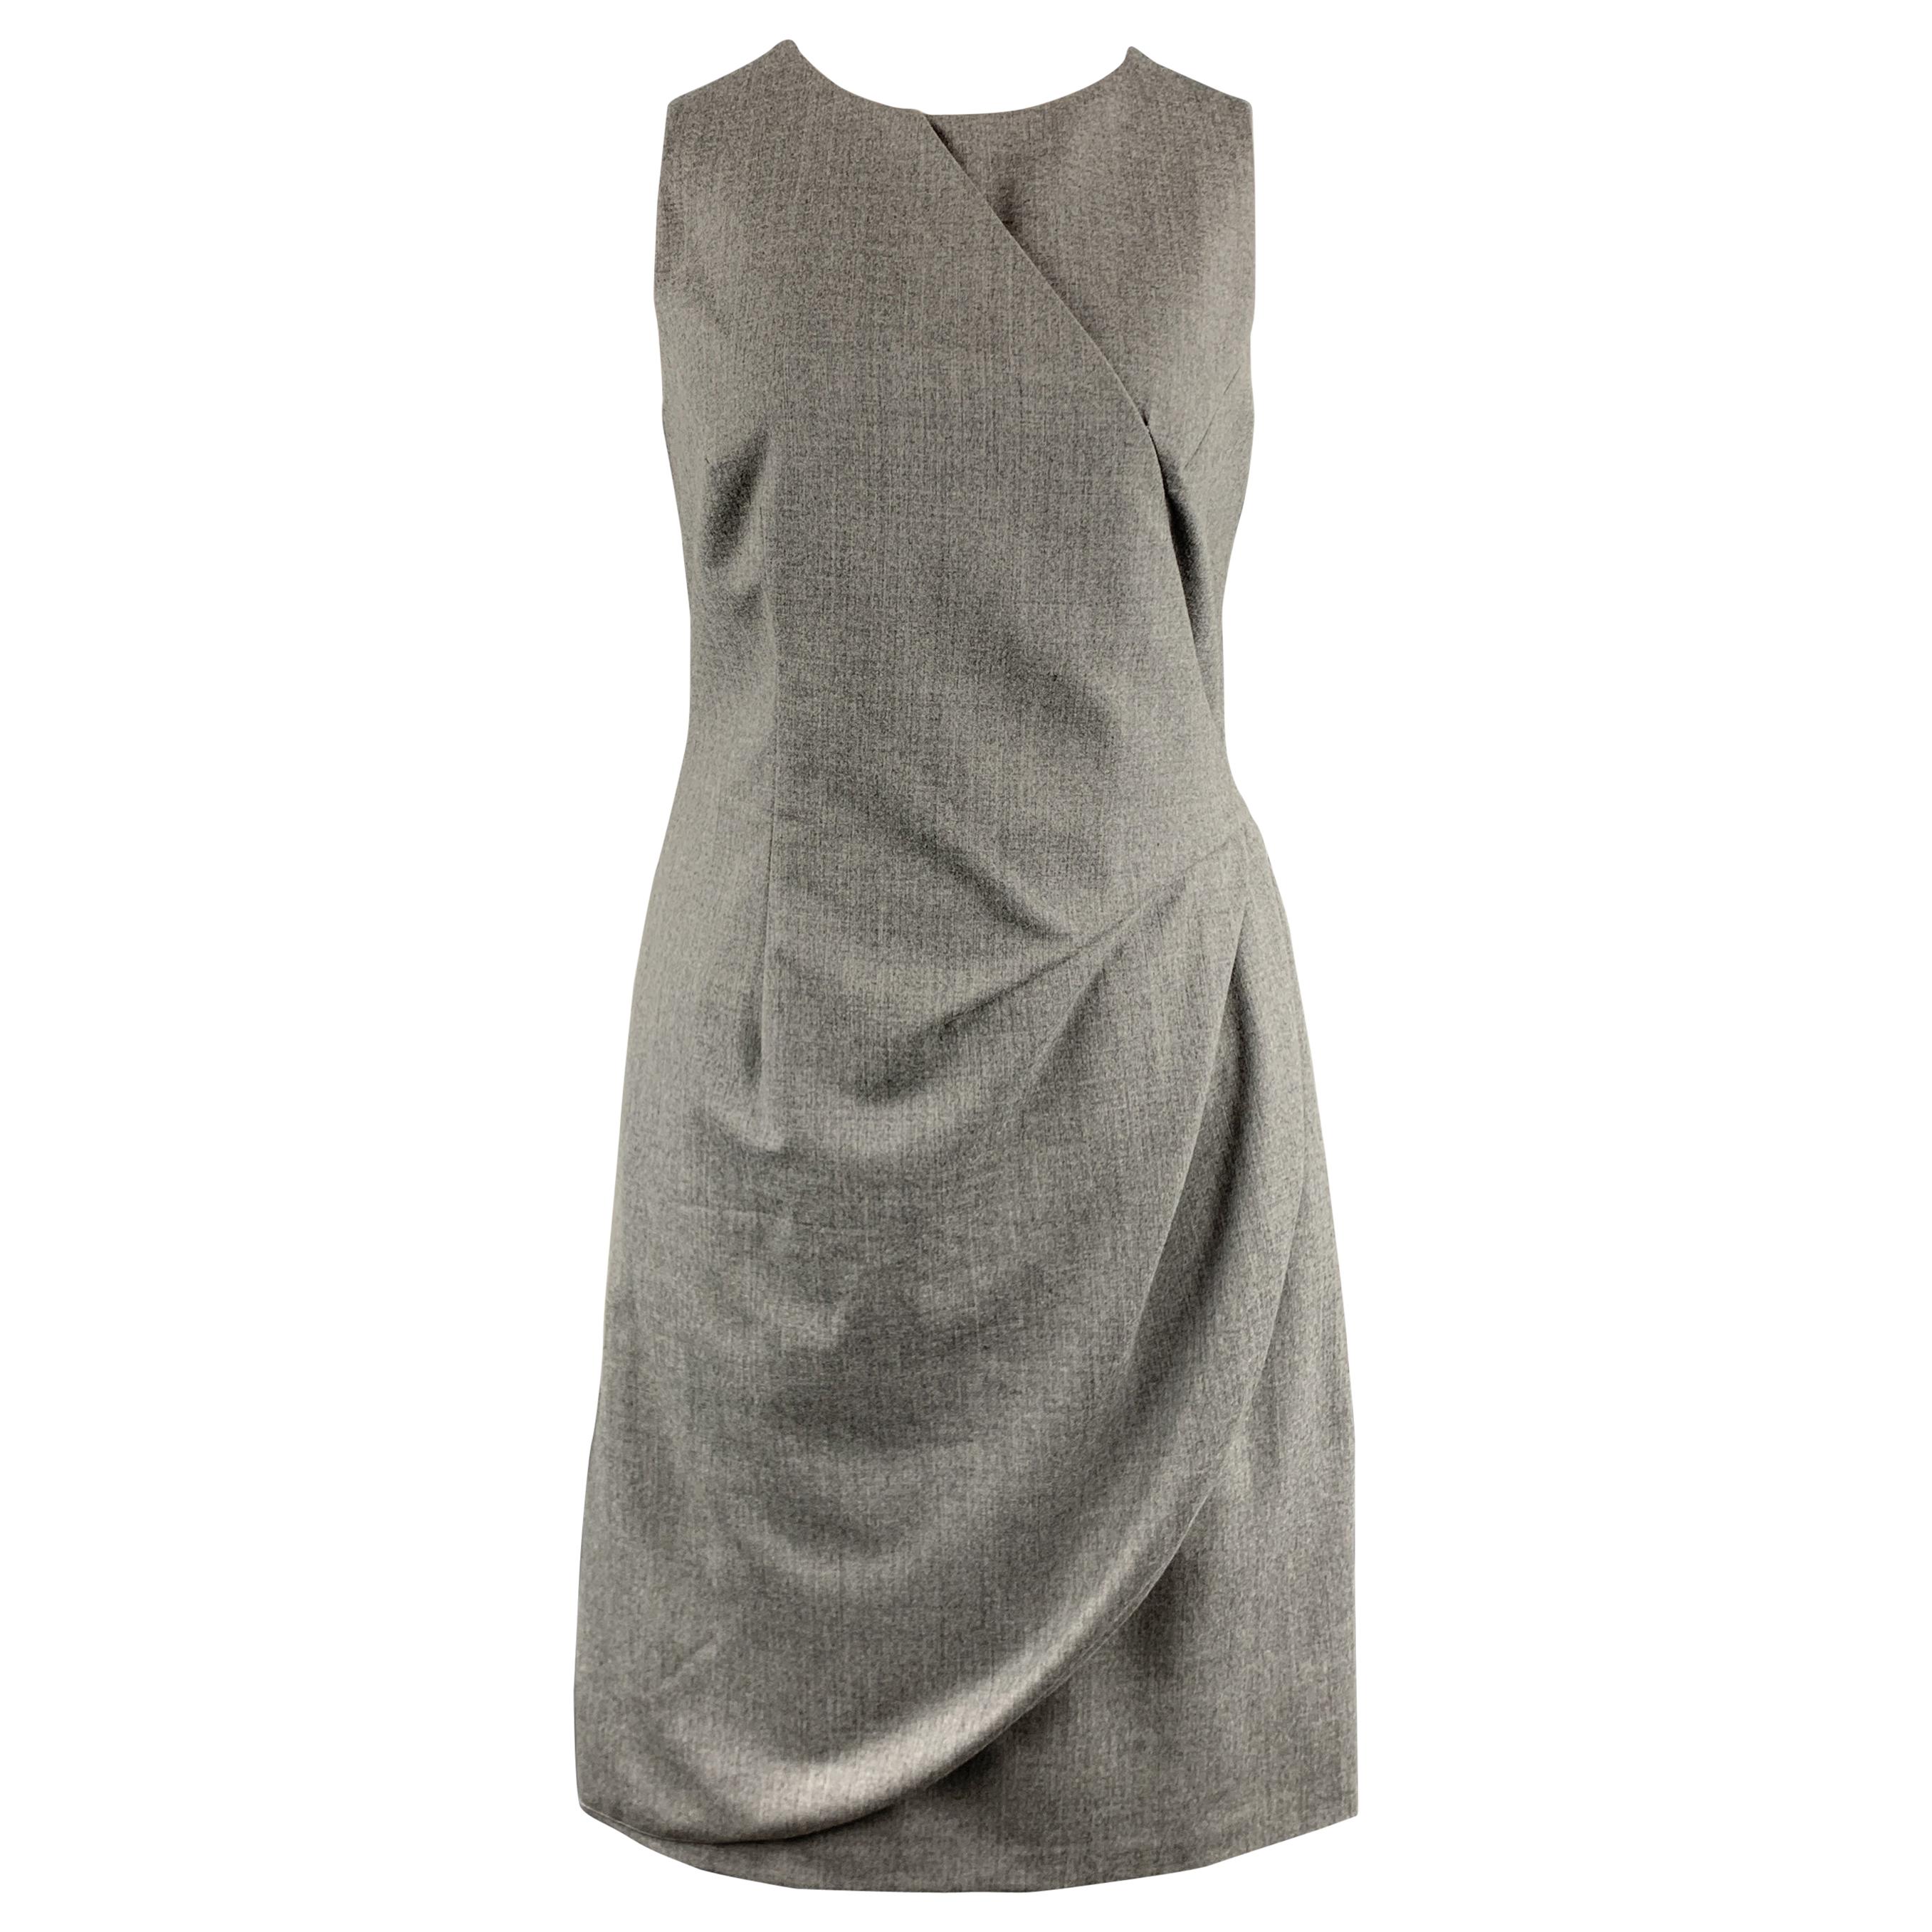 GIORGIO ARMANI Size 10 Heather Grey Virgin Wool Blend Sleeveless Drape Dress